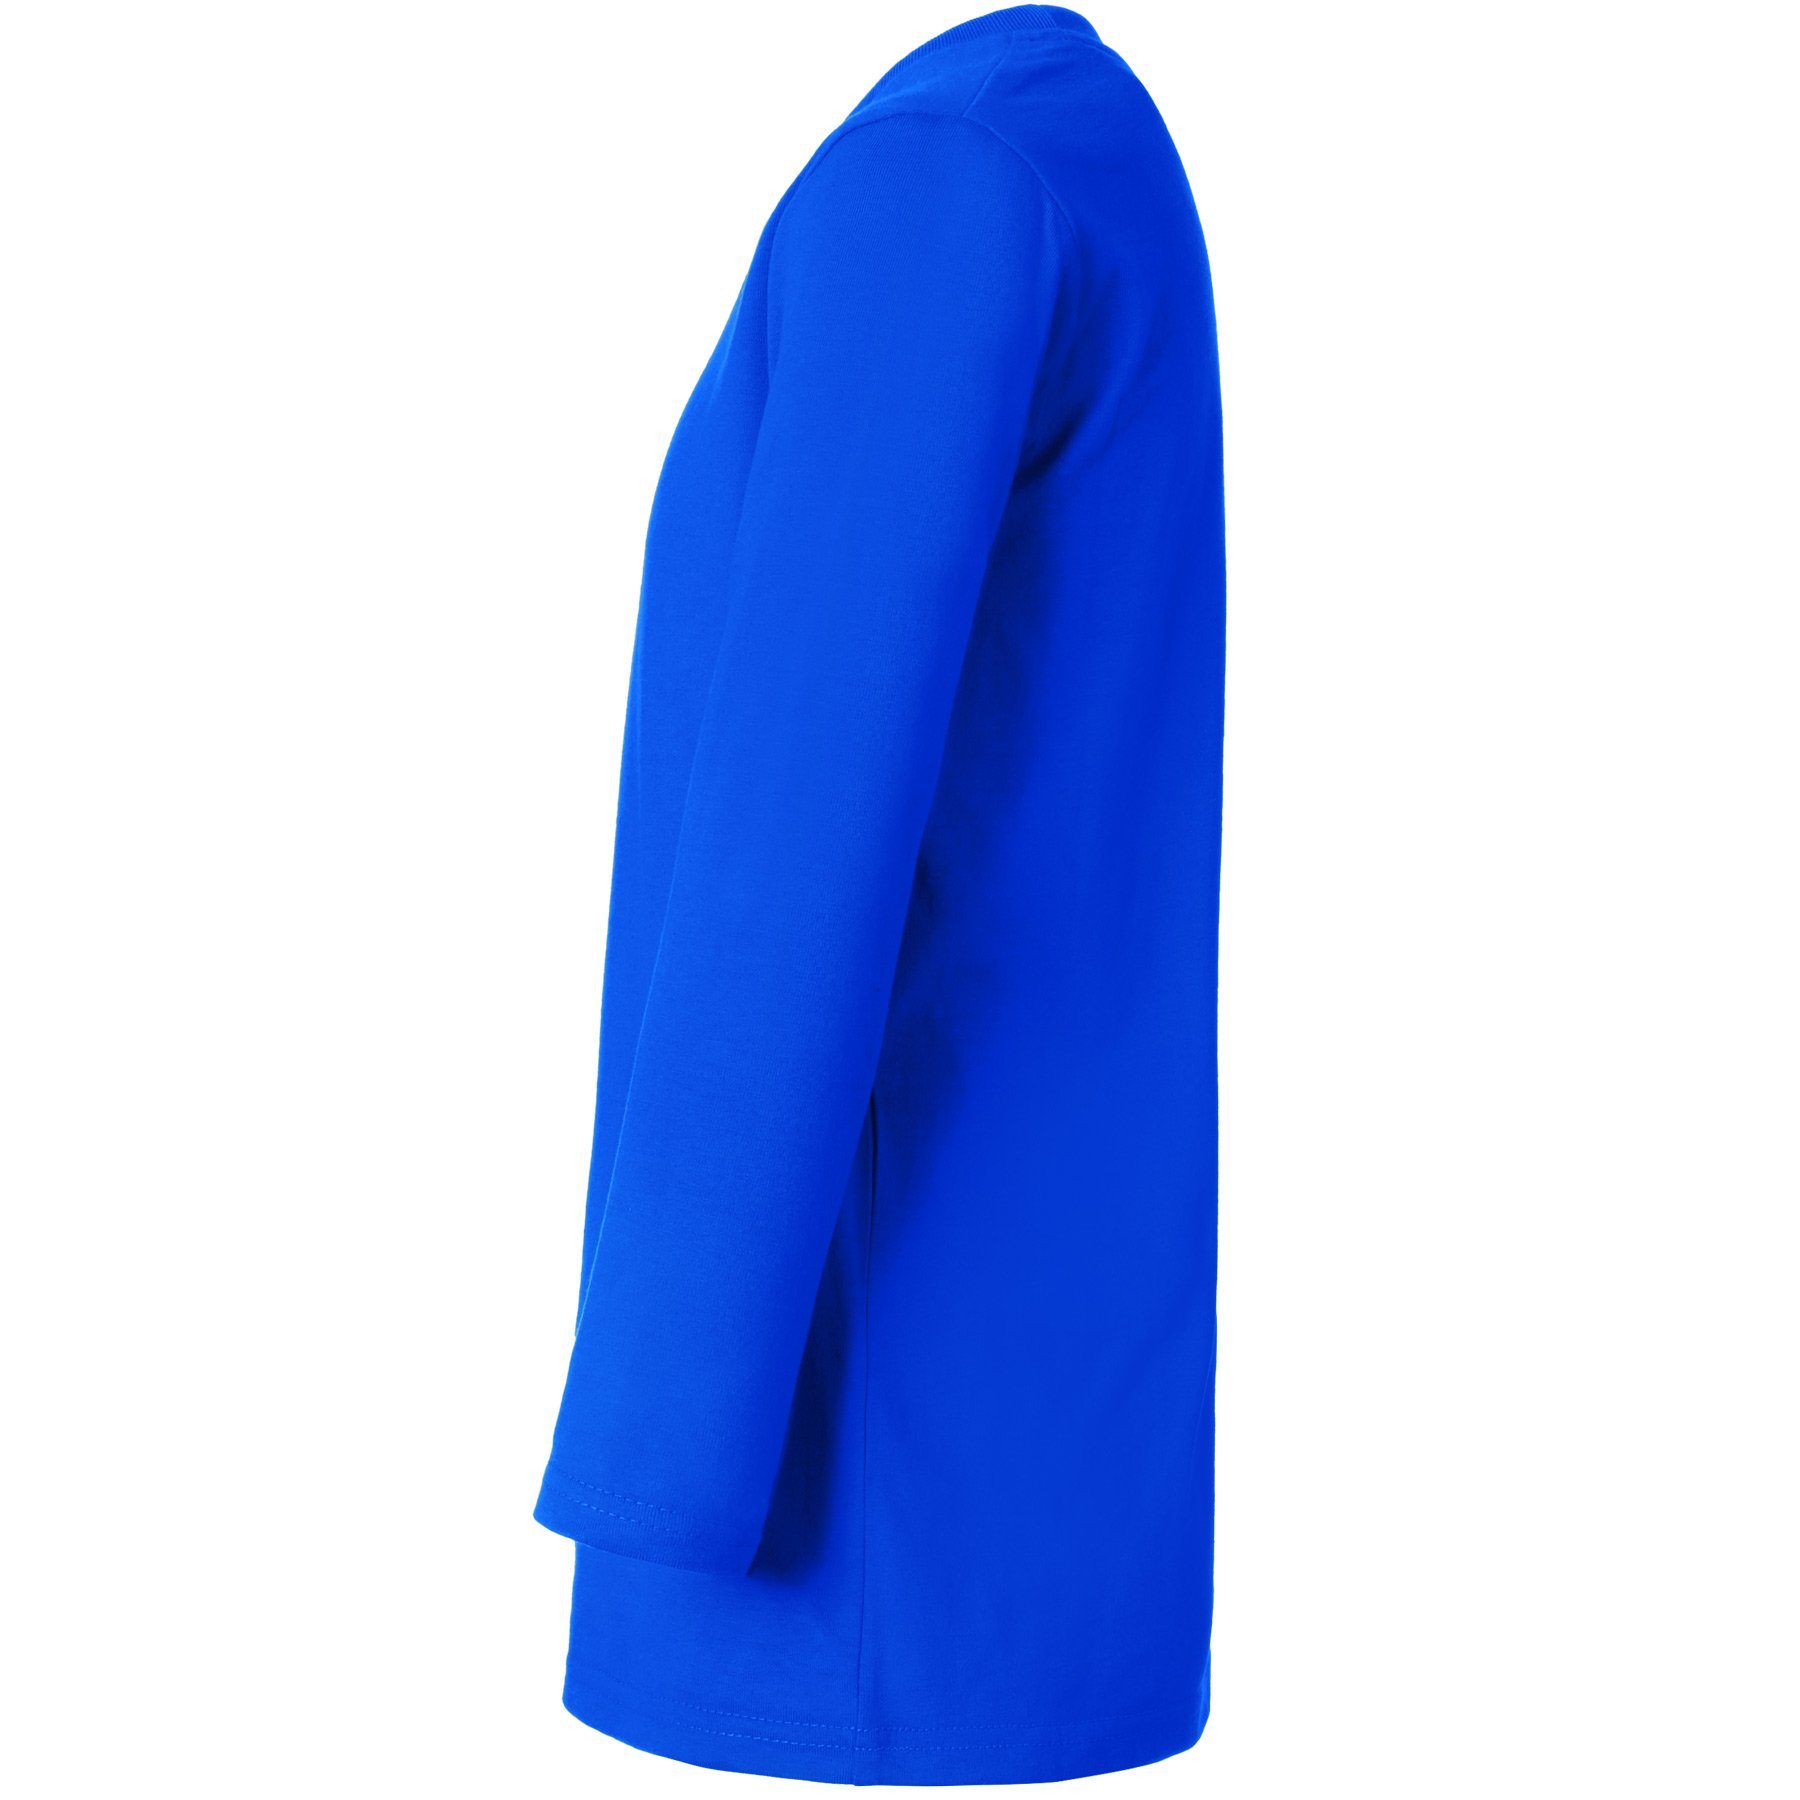 blau Longsleeve Männer Rundhals dressforfun Langarm-Shirt